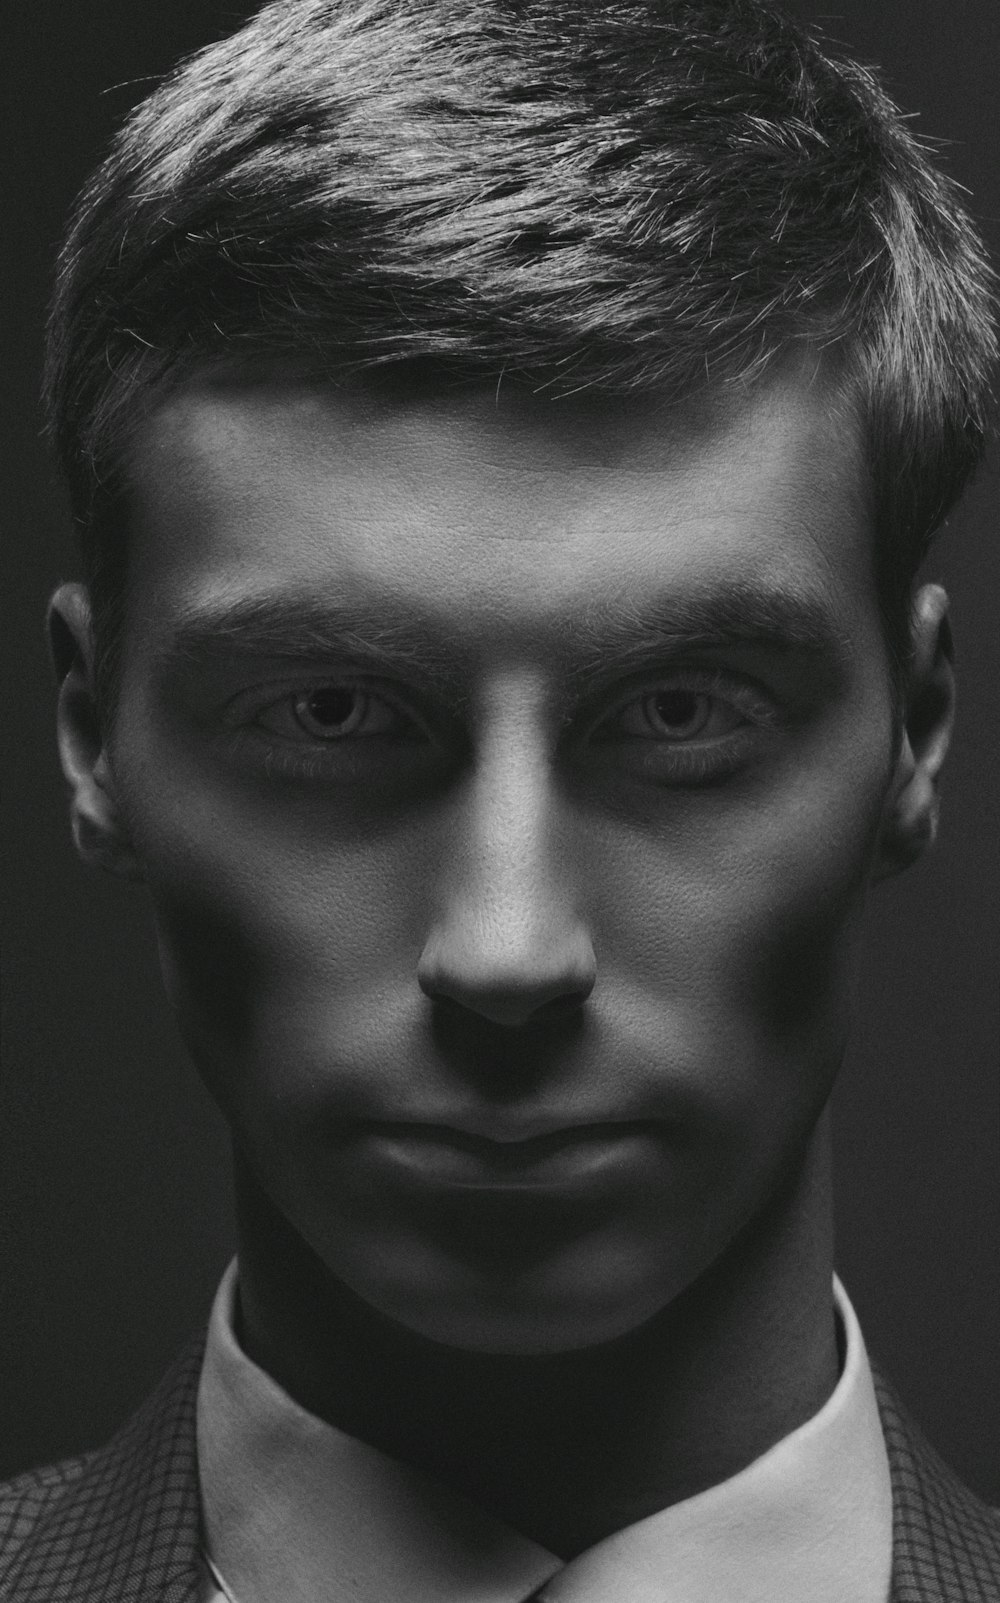 monochrome photo of man's face